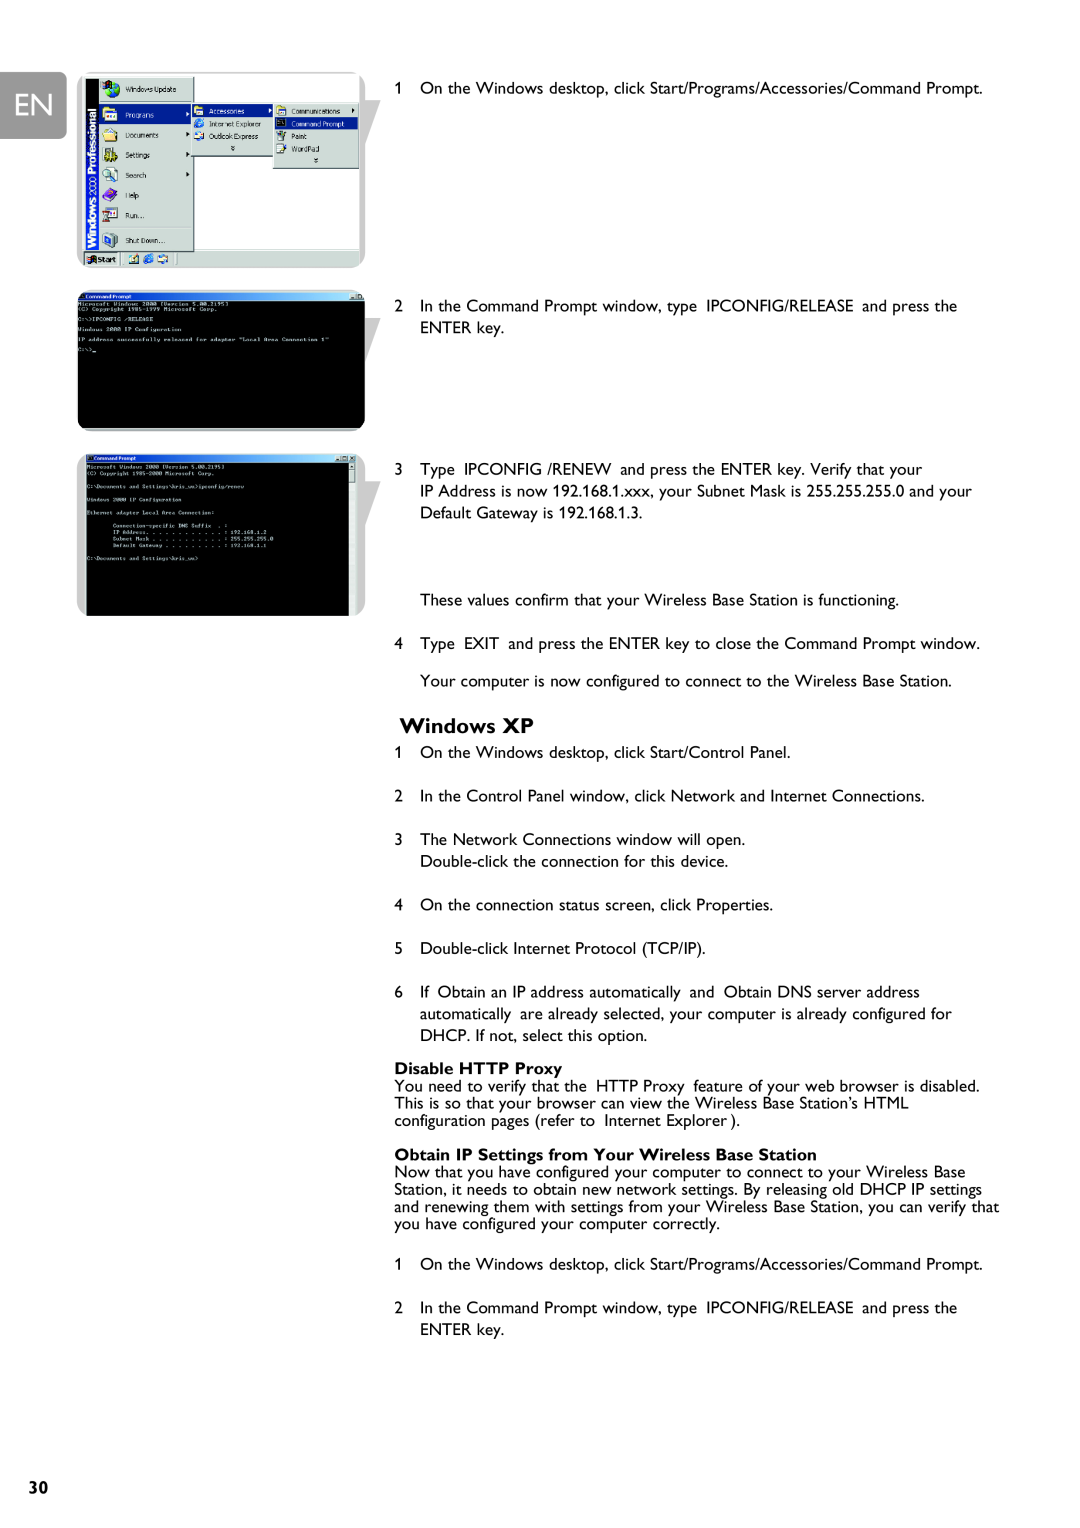 Philips SNR6500 user manual Windows XP 